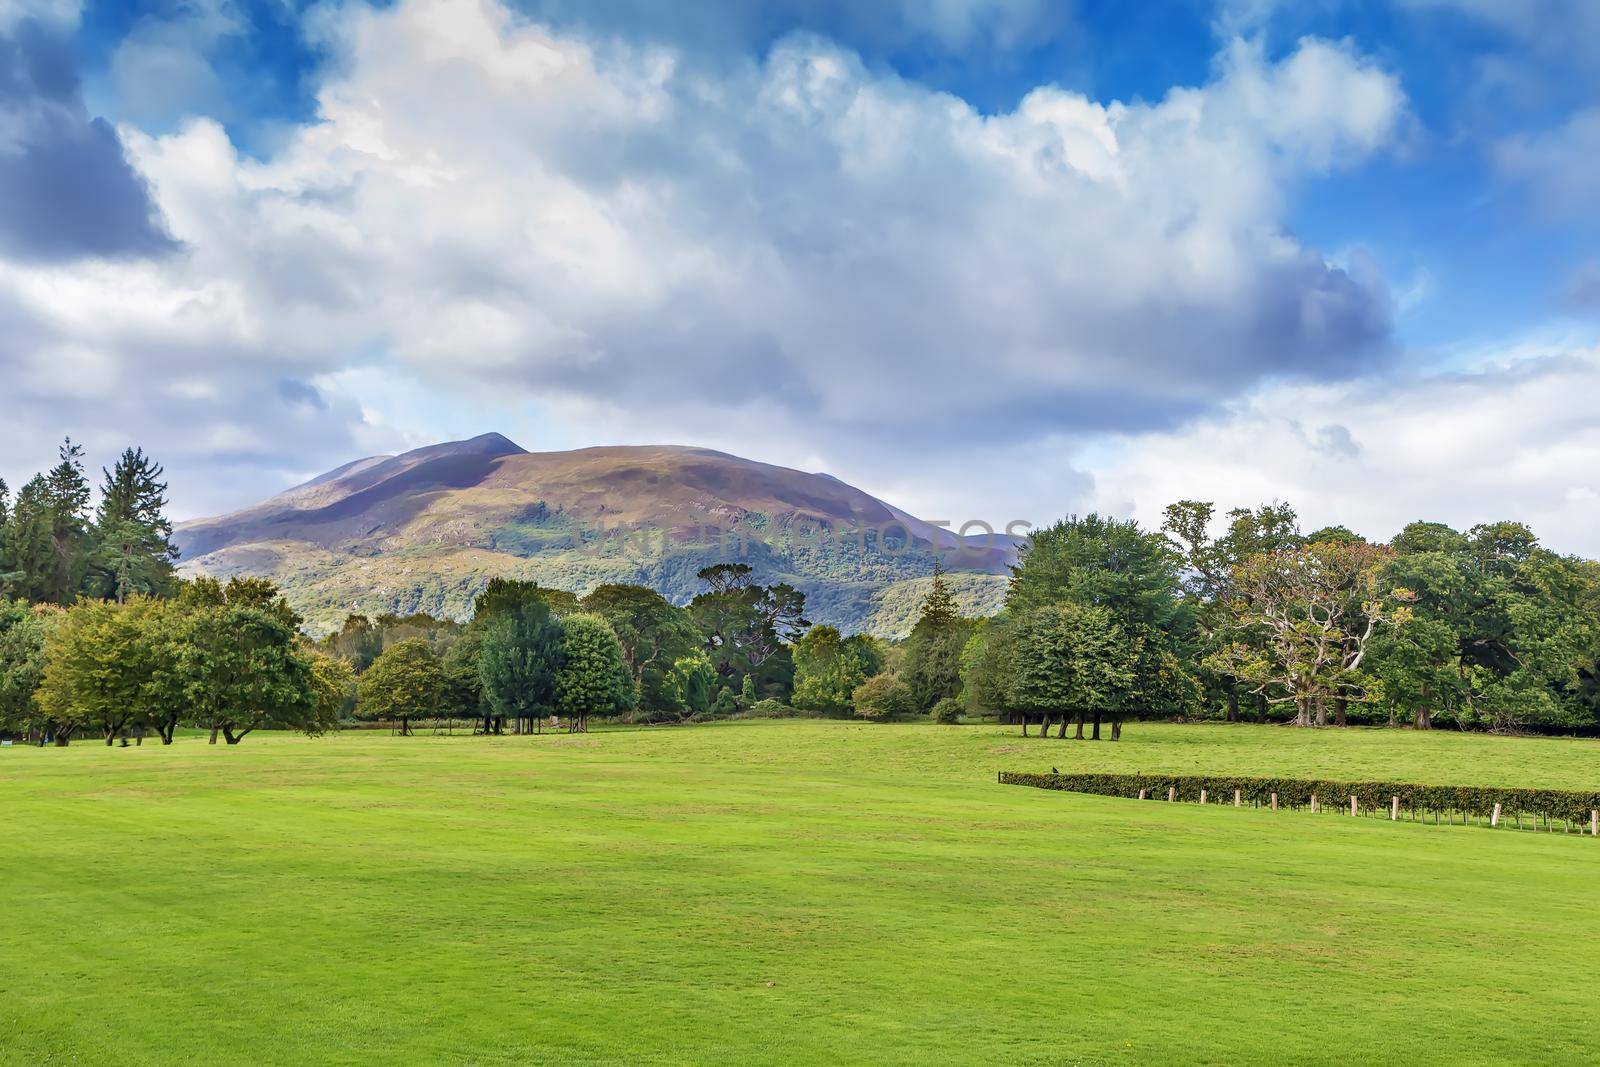 Landscape with Mangerton Mountain, Ireland by borisb17